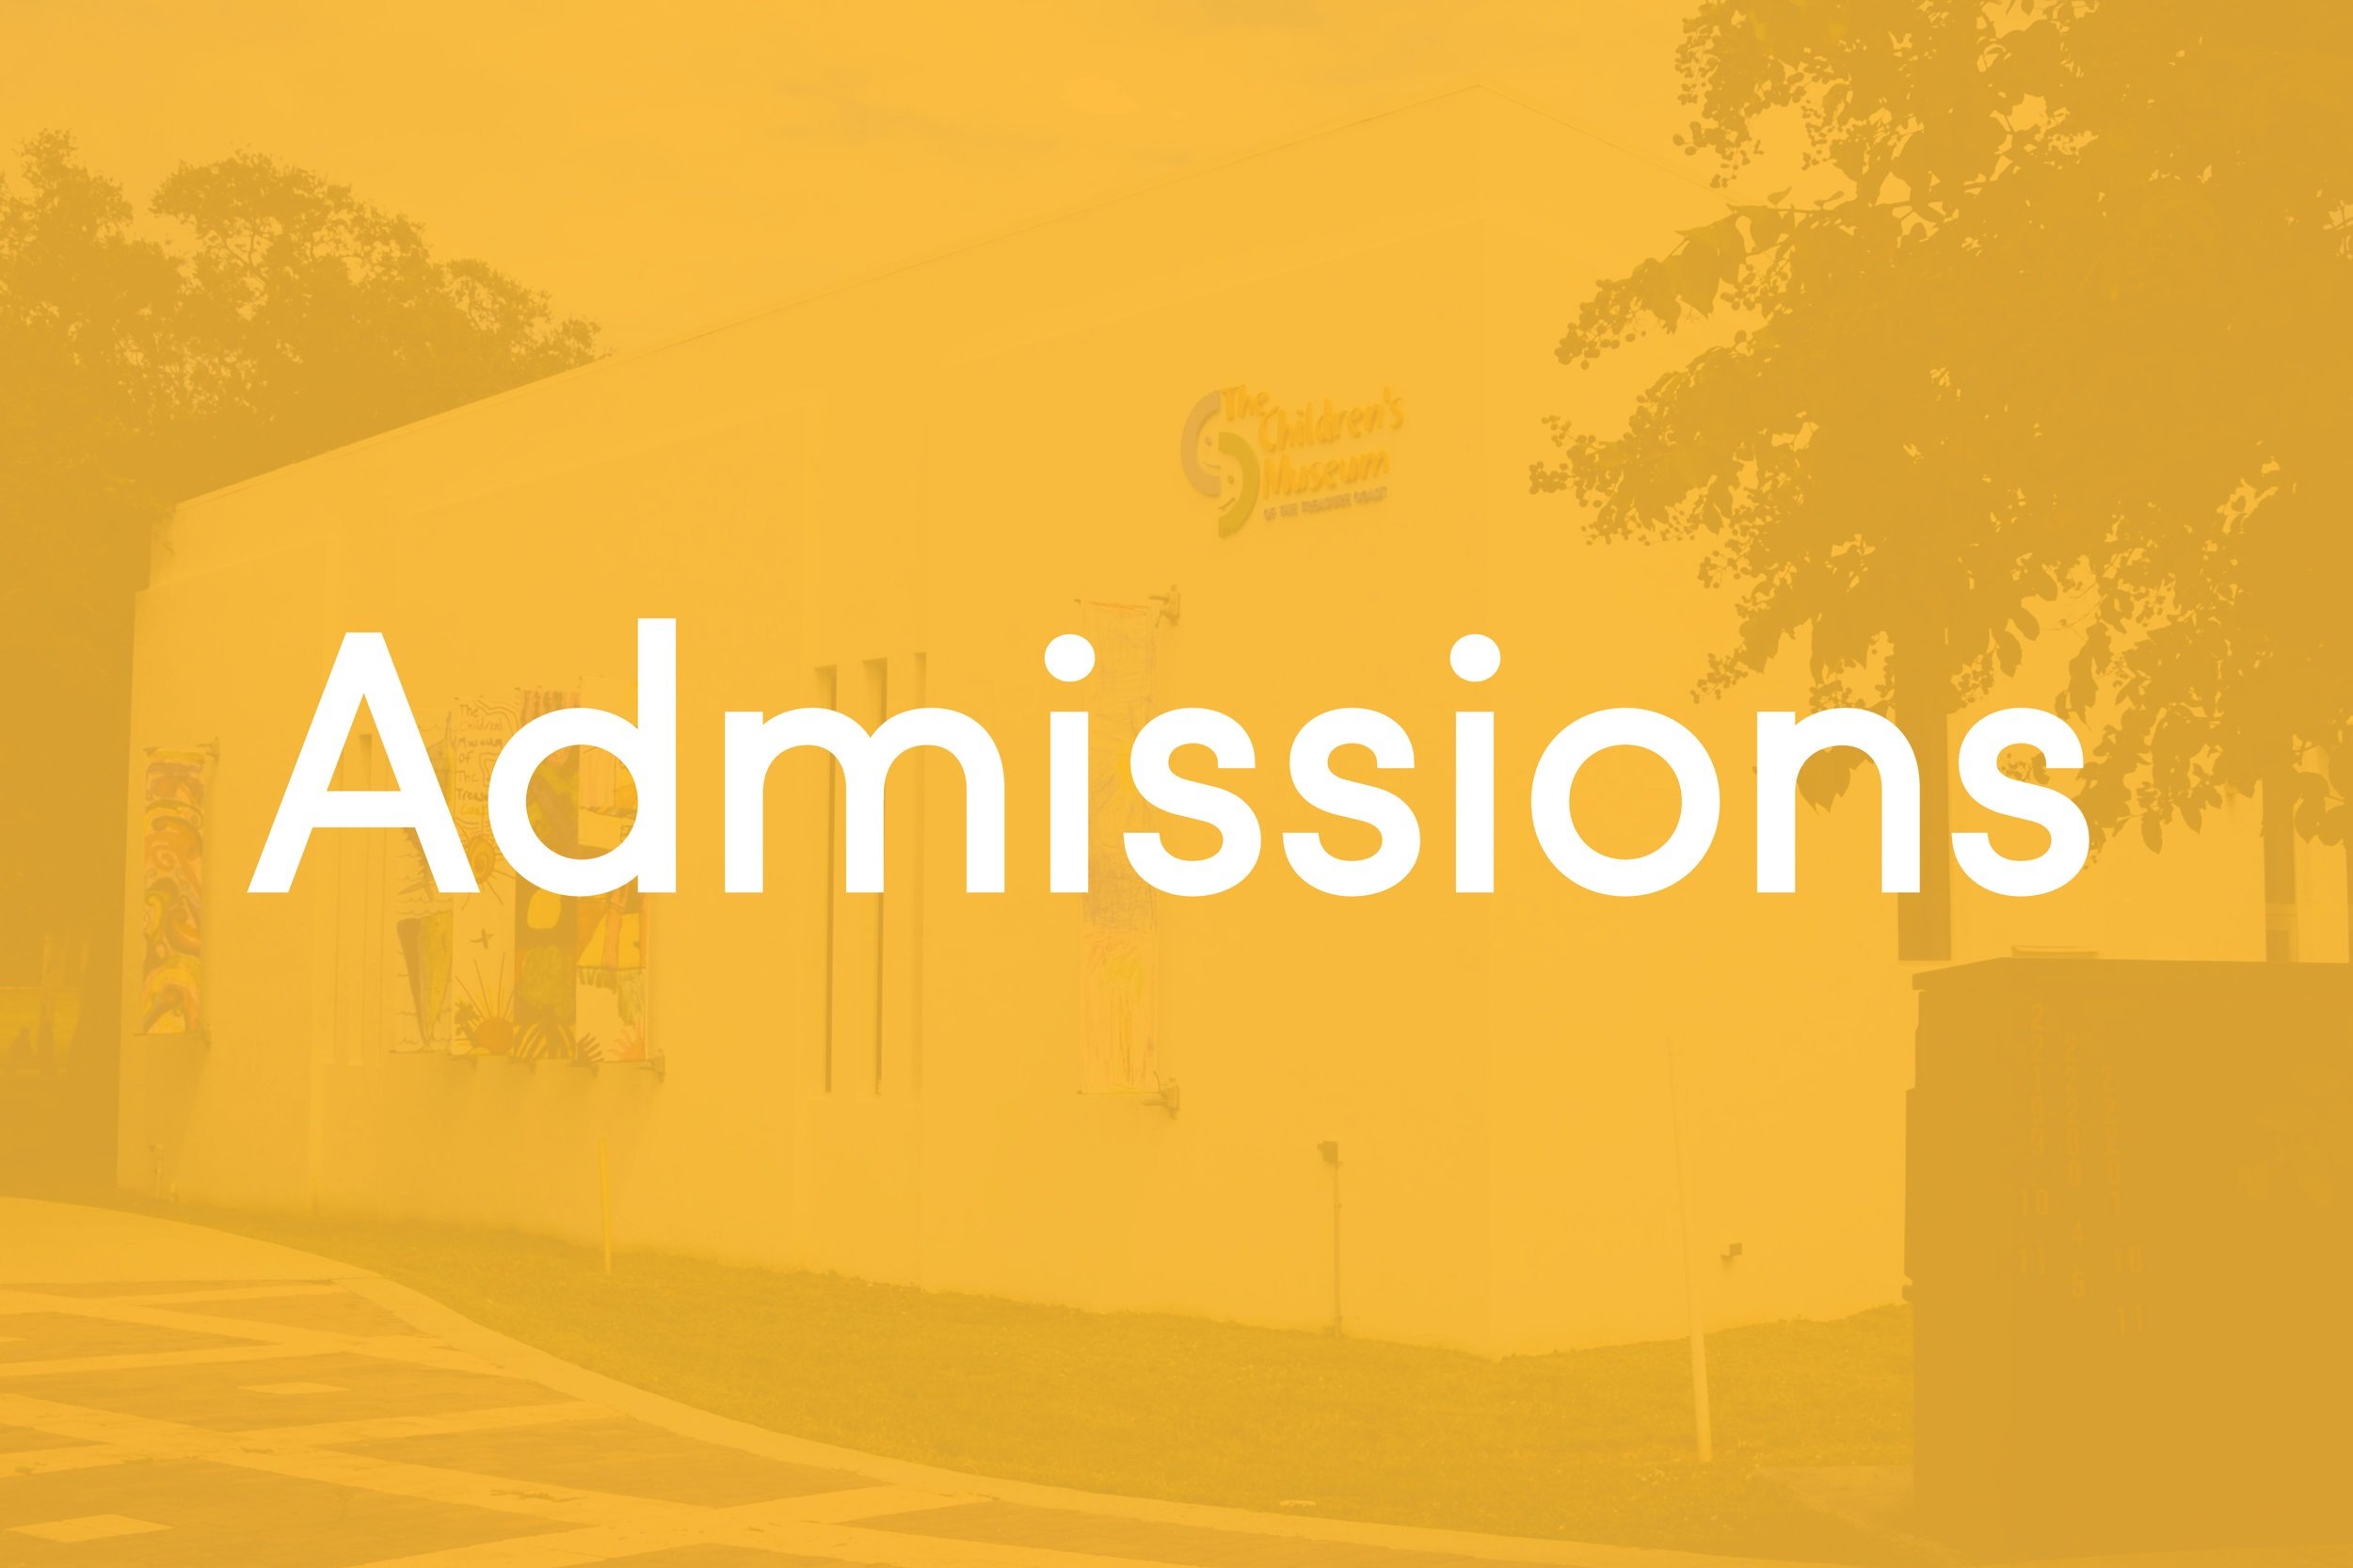 admissions_banner.jpg